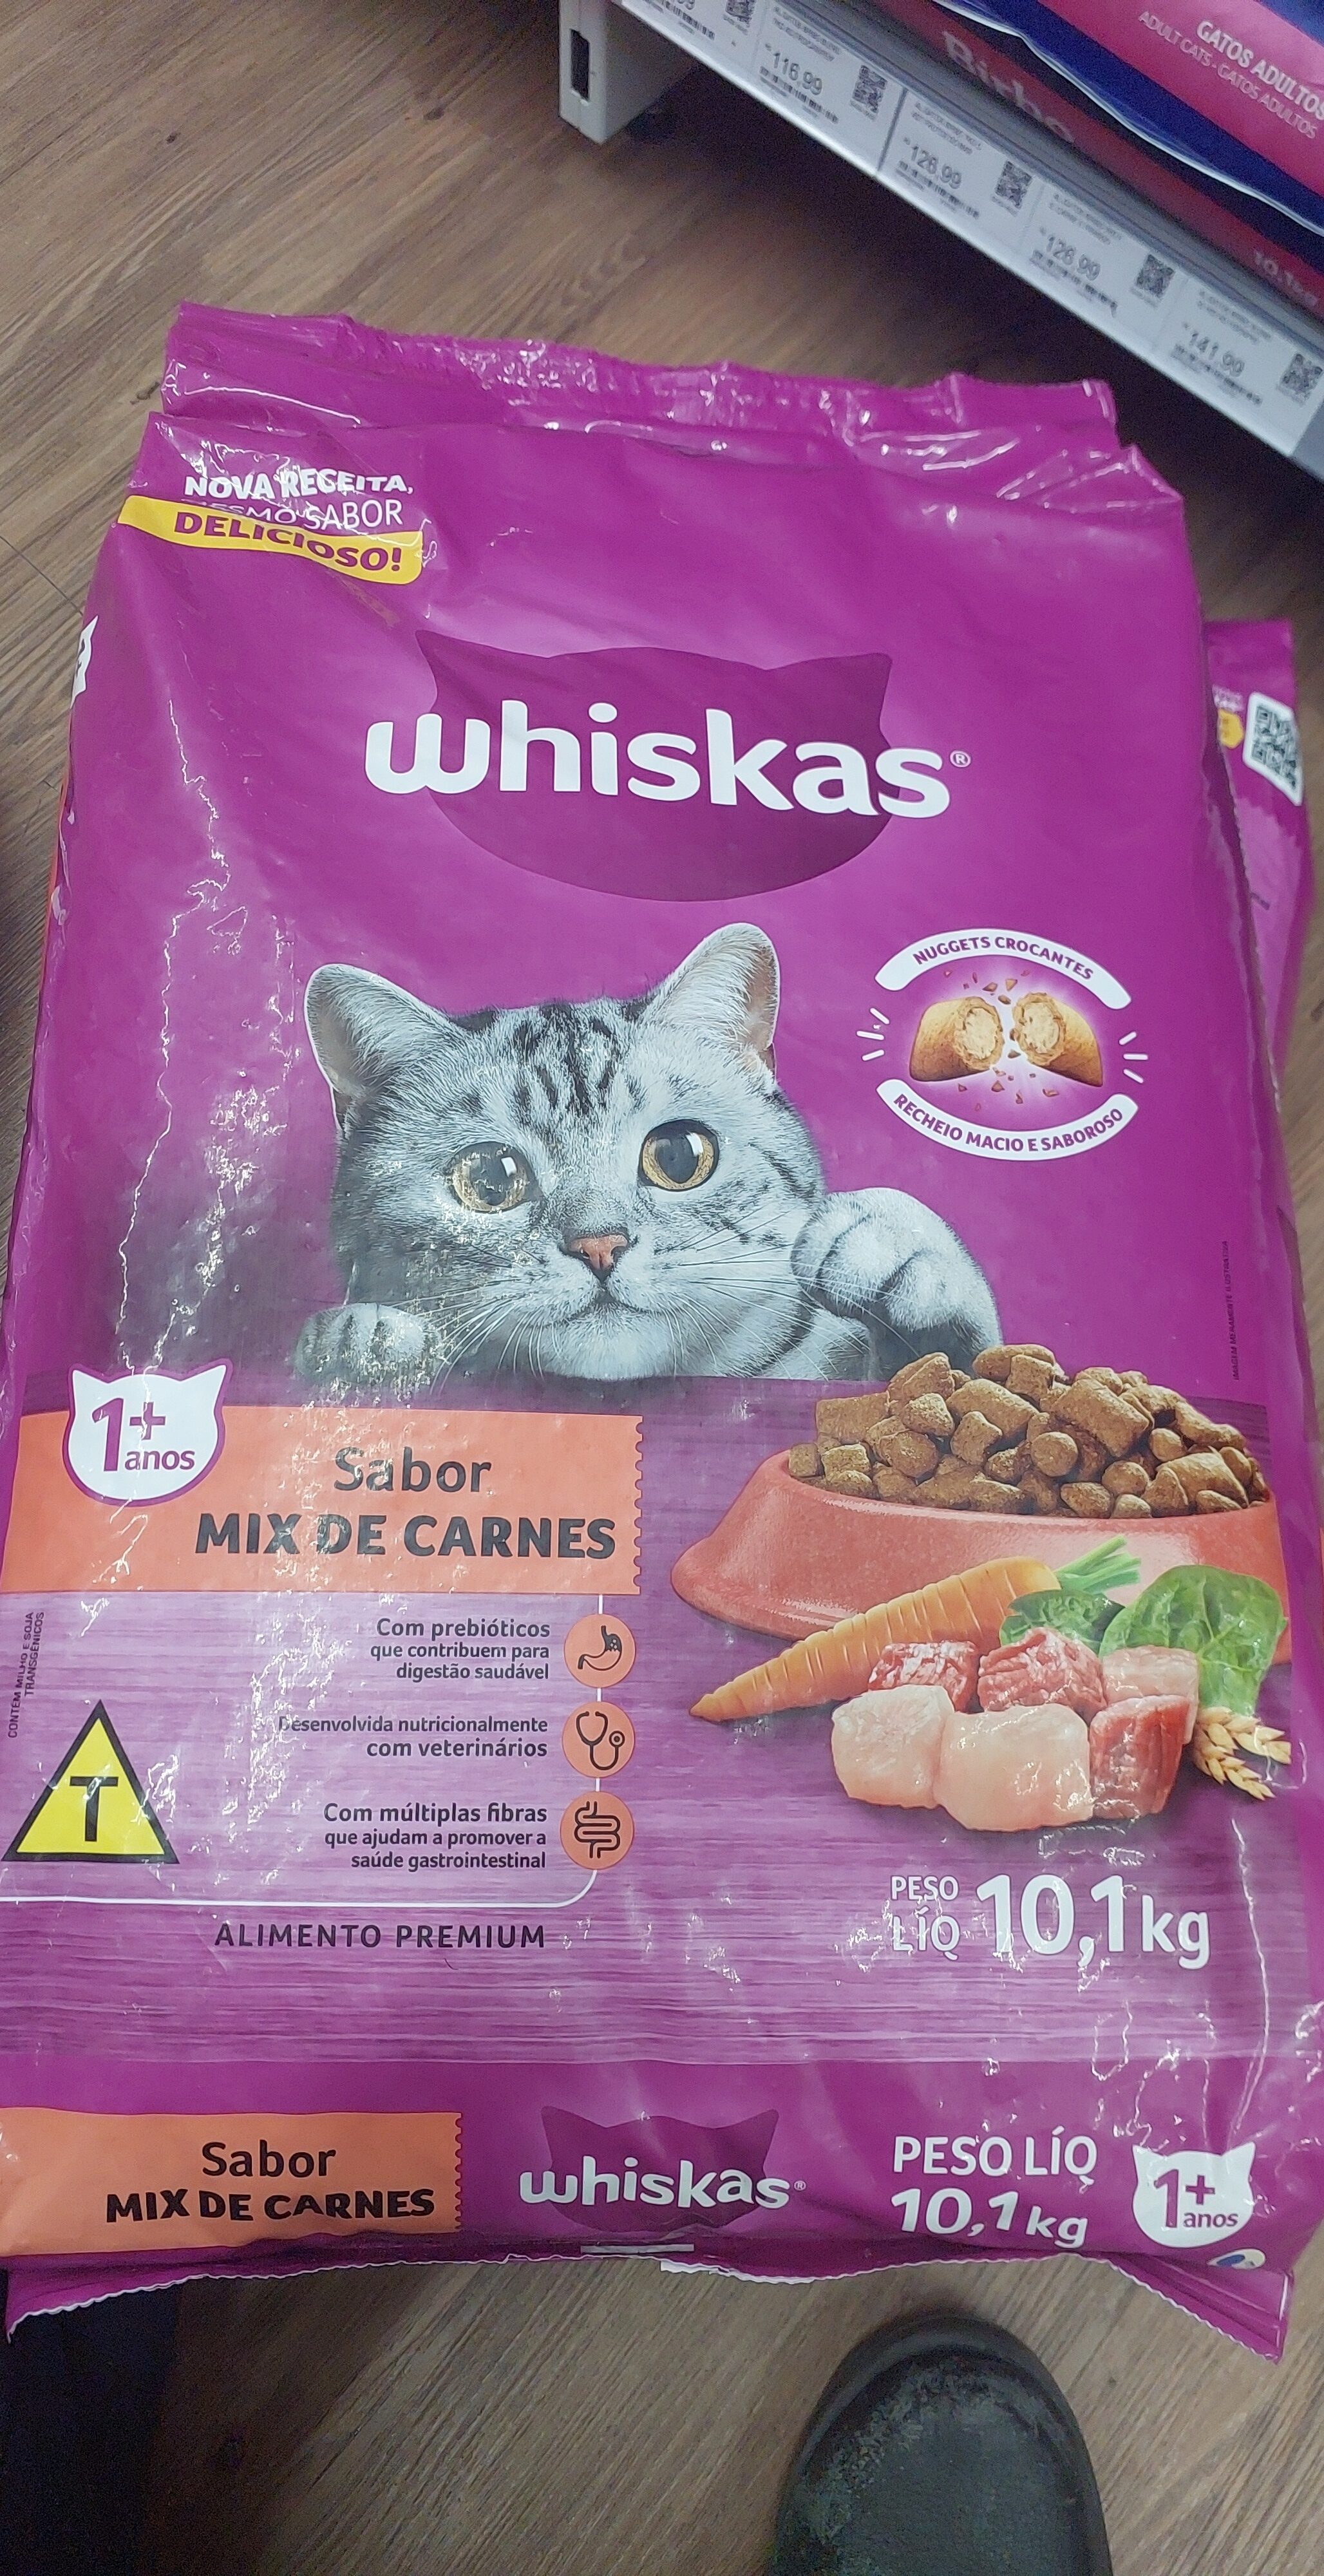 Whiskas Gatos Mix Sabores 10kg - Product - pt